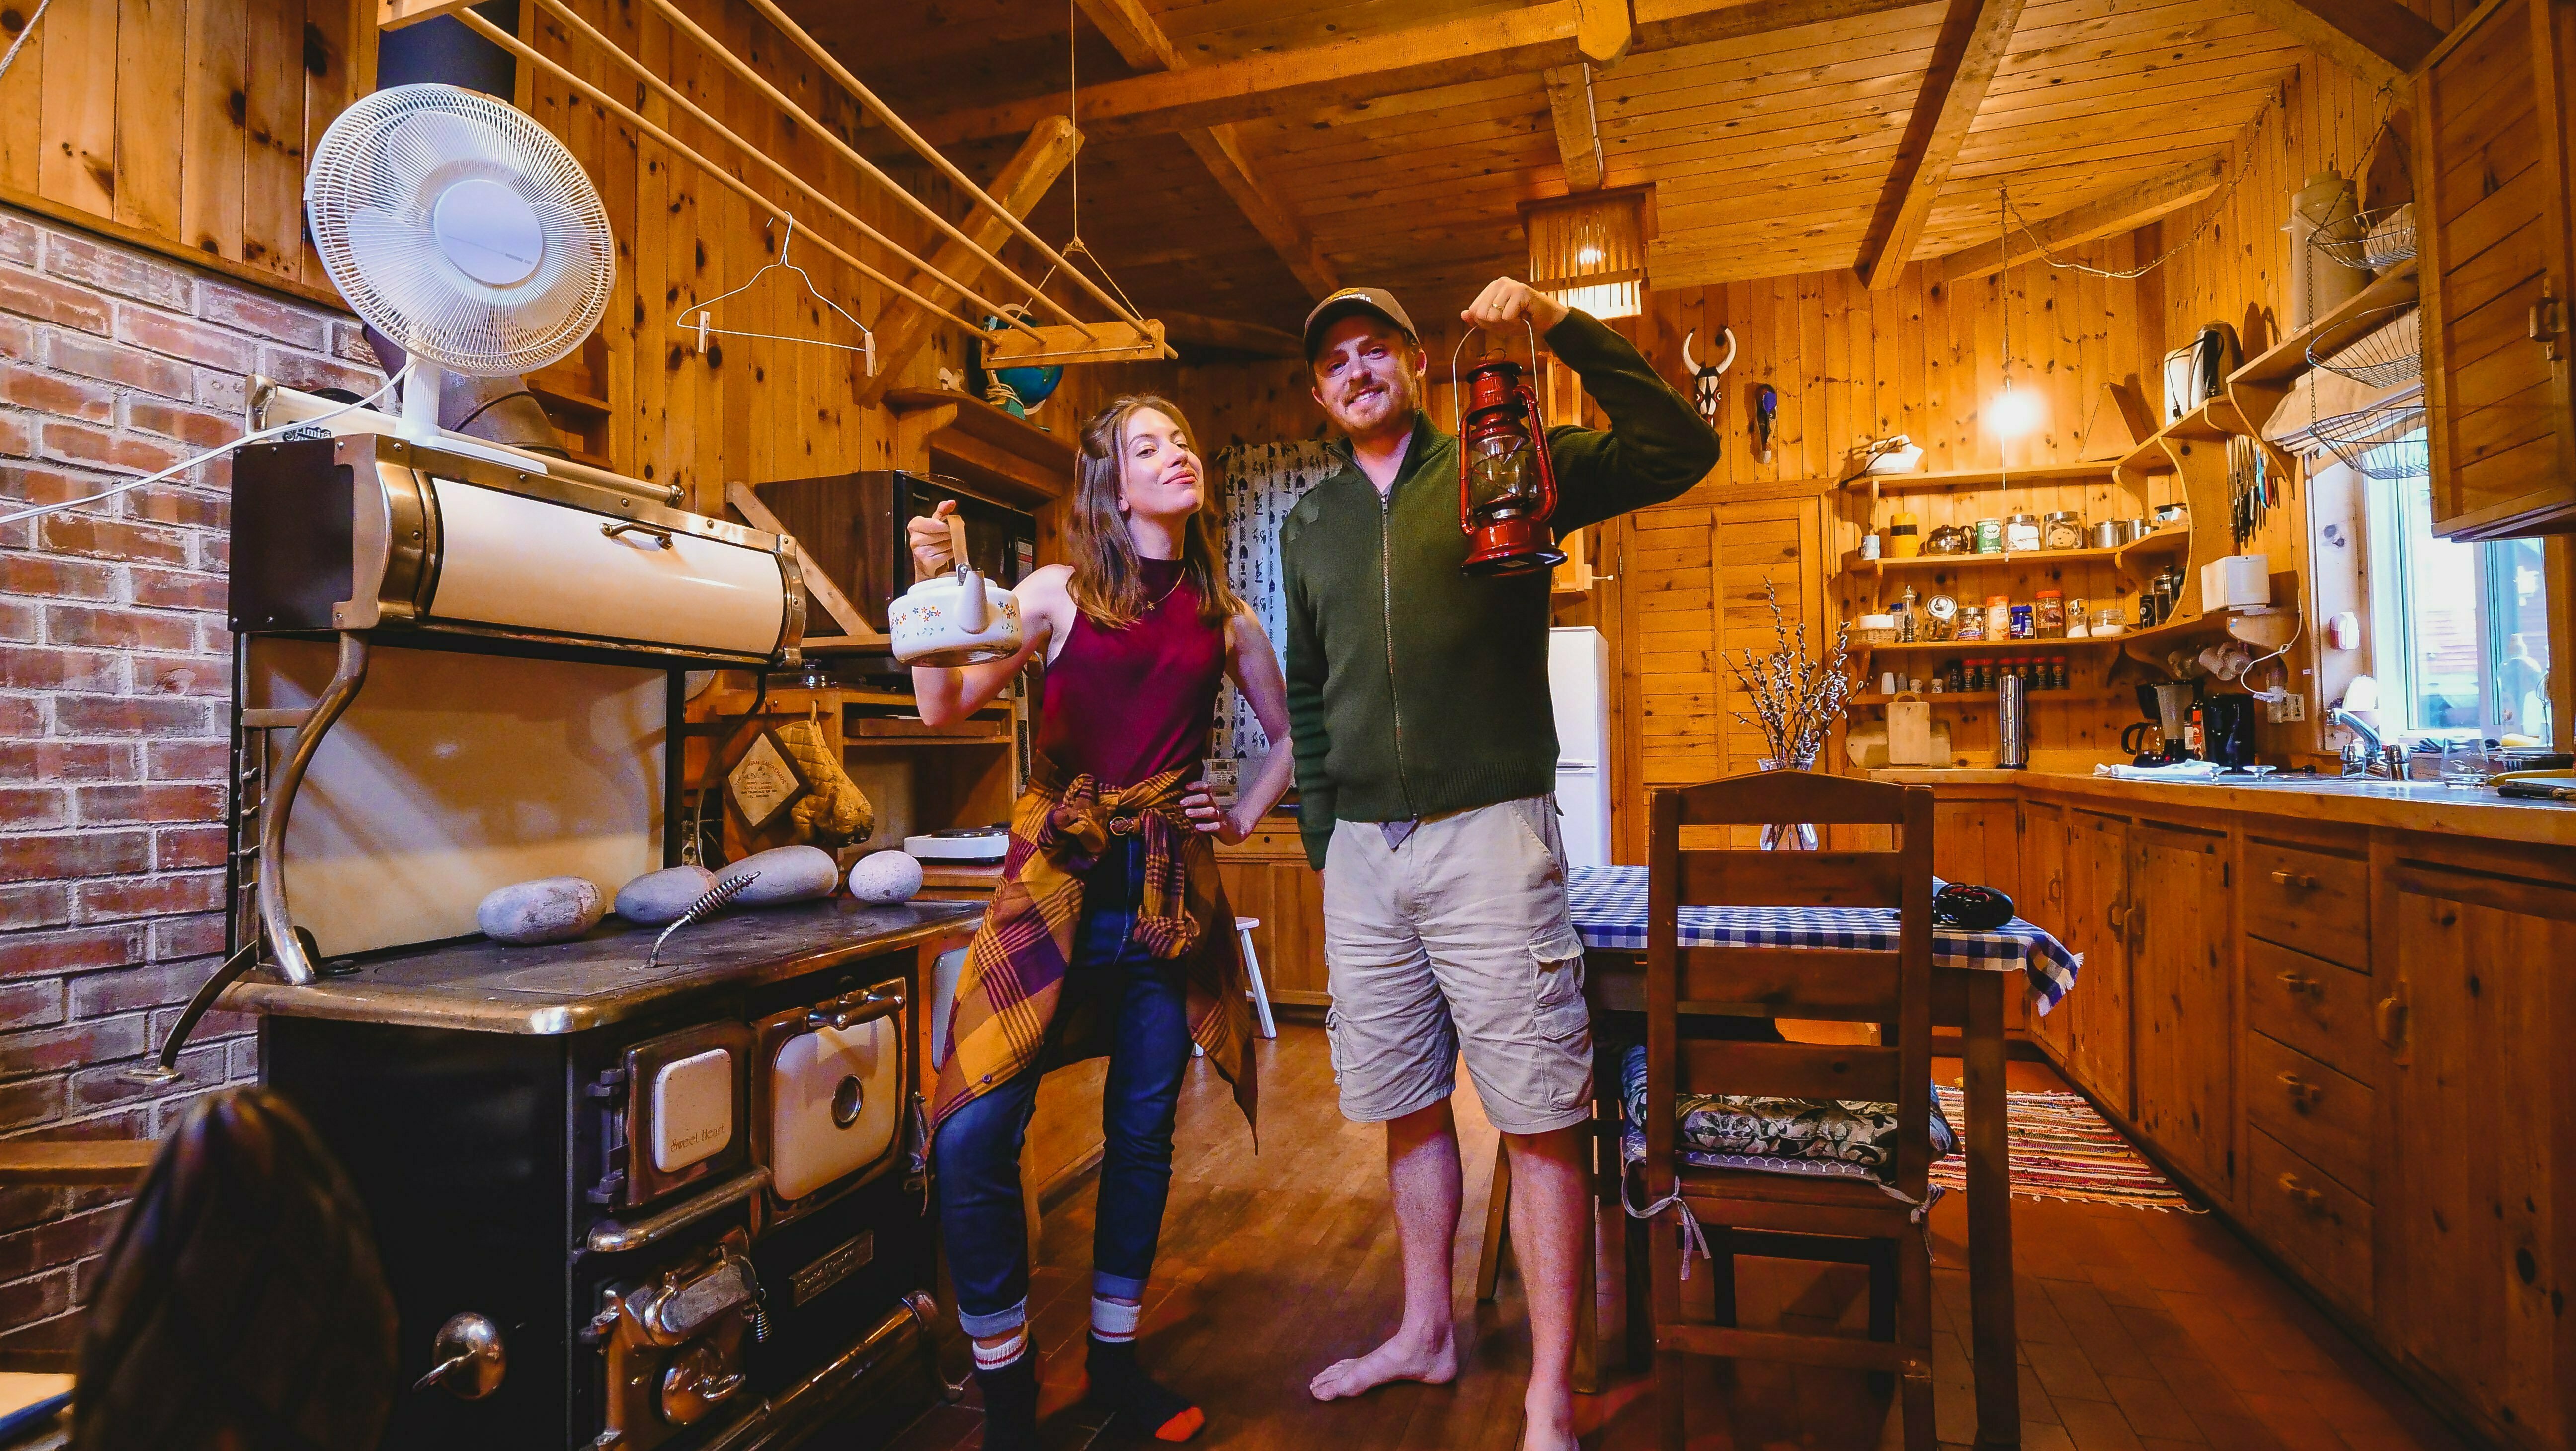 Nomadic Samuel and Audrey enjoying a rustic cabin in Nova Scotia